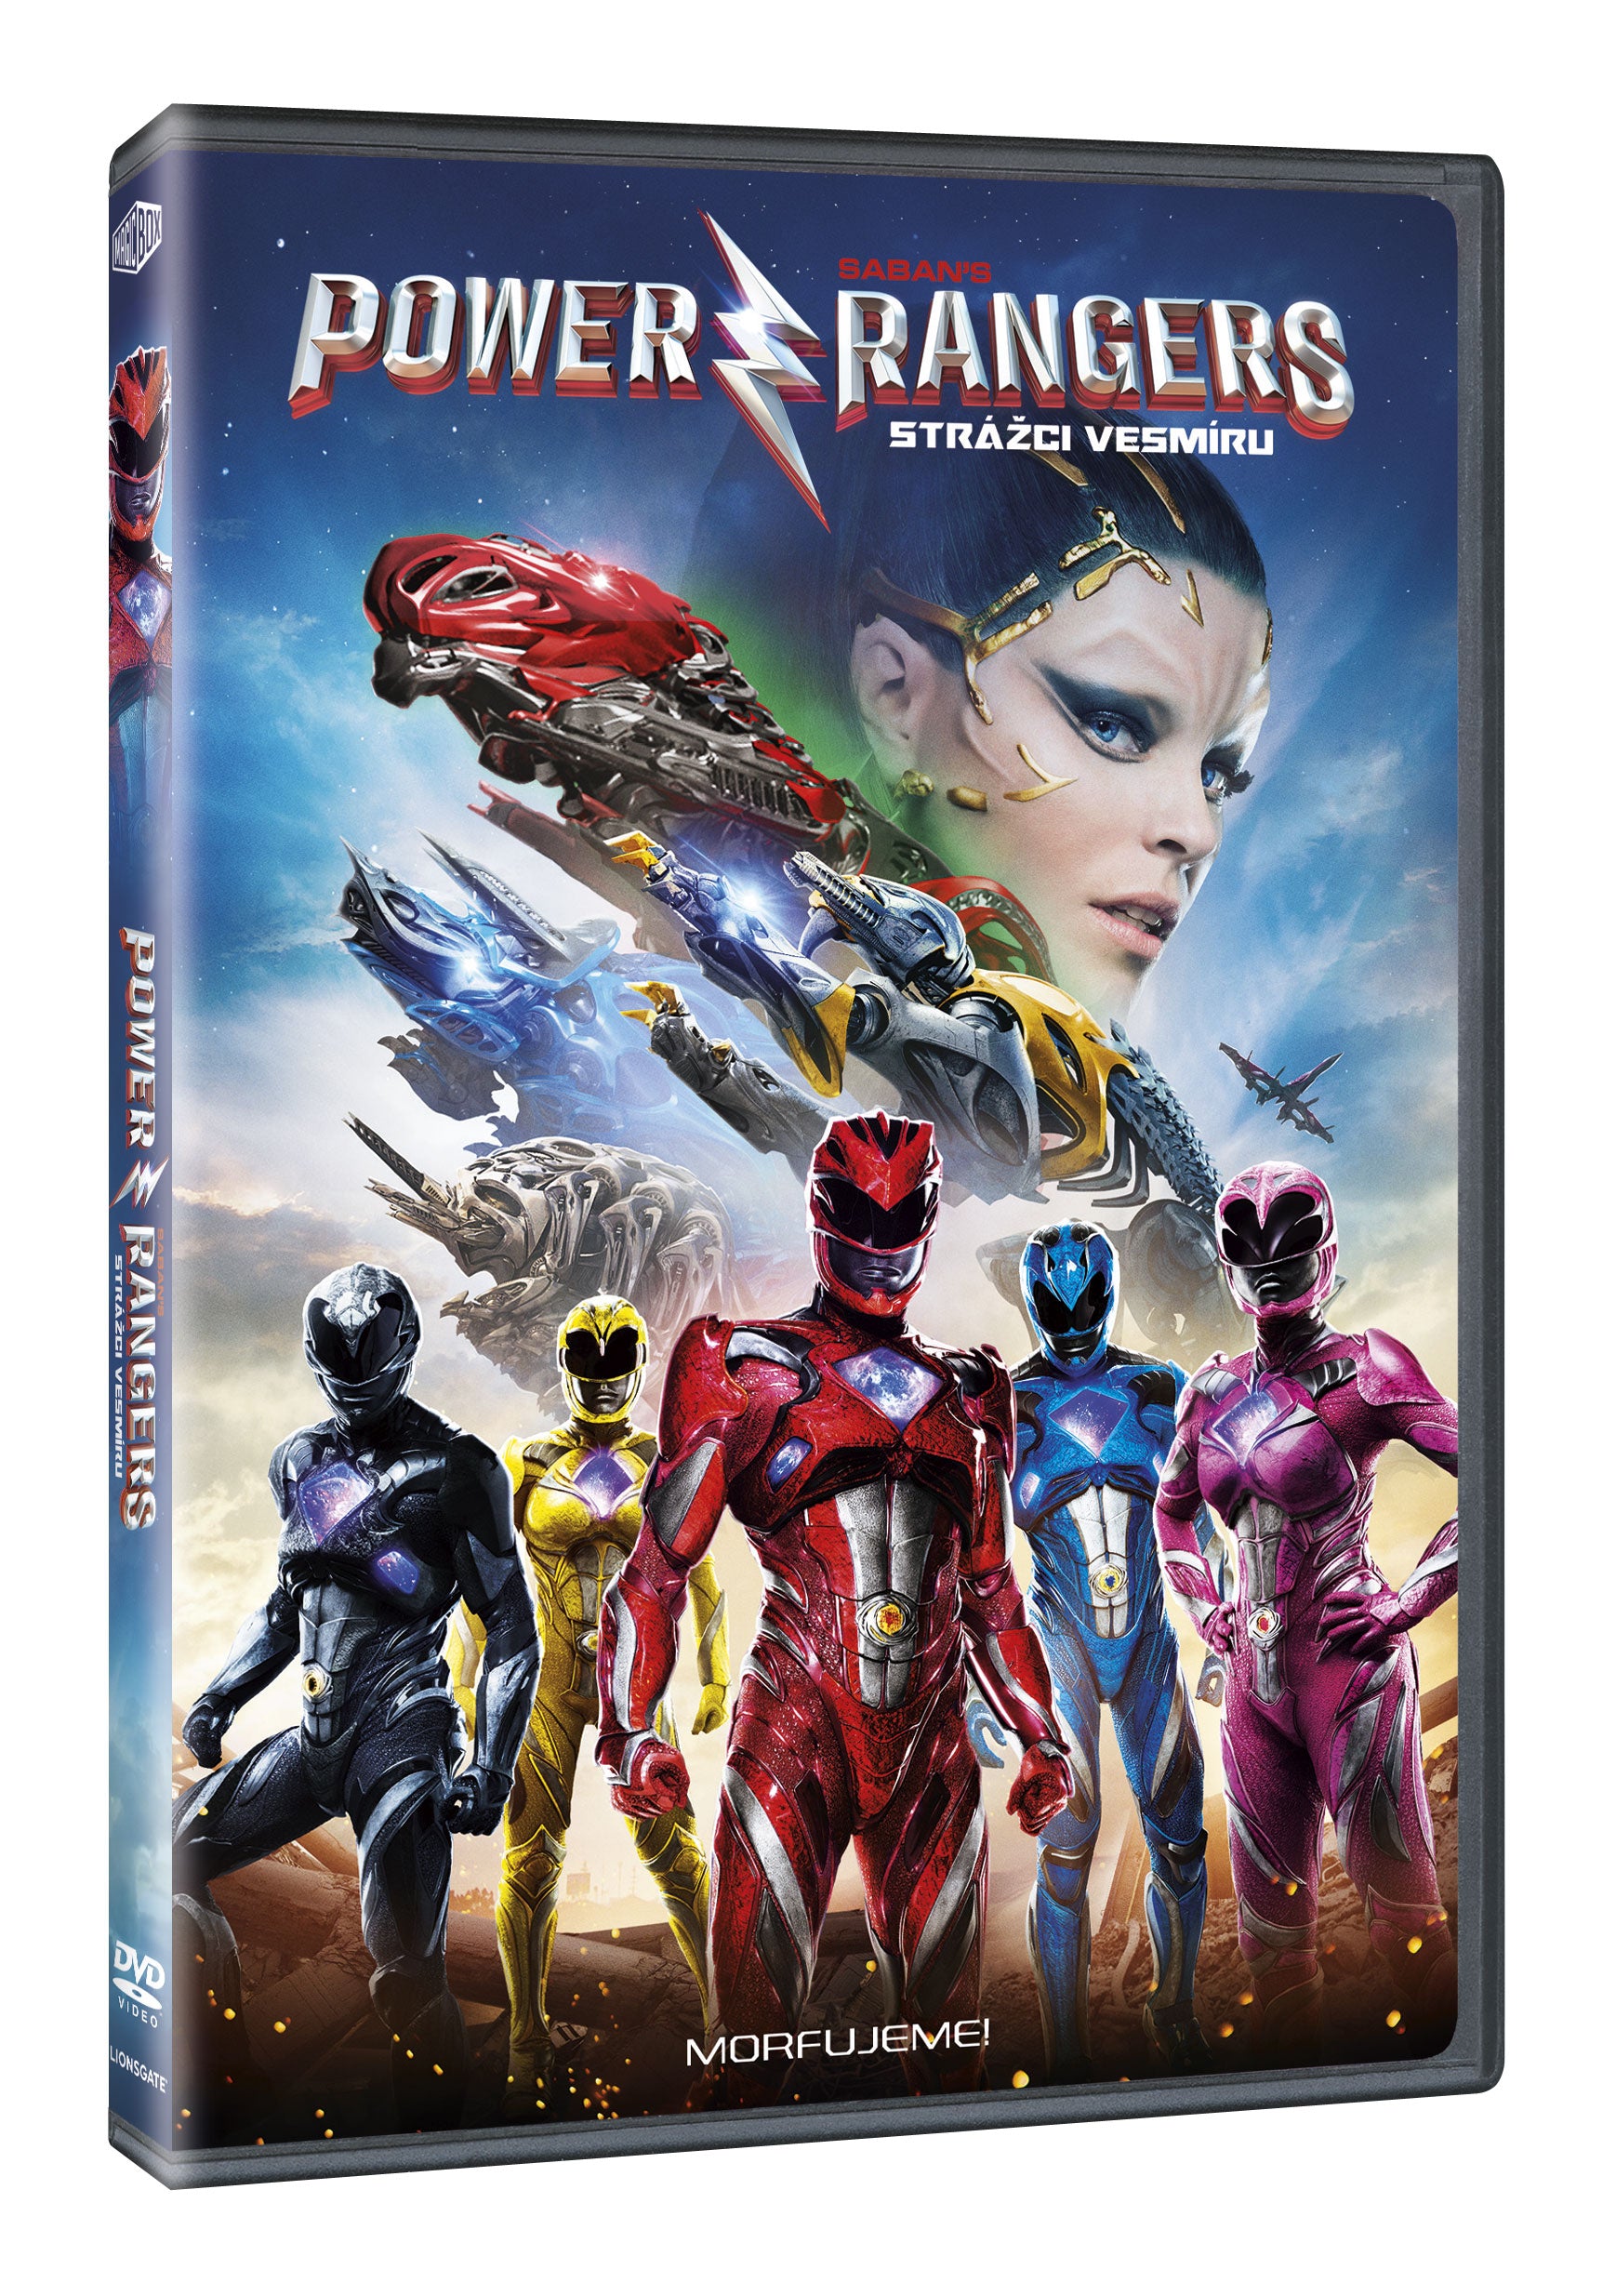 Power Rangers - Strazci vesmiru DVD / Power Rangers